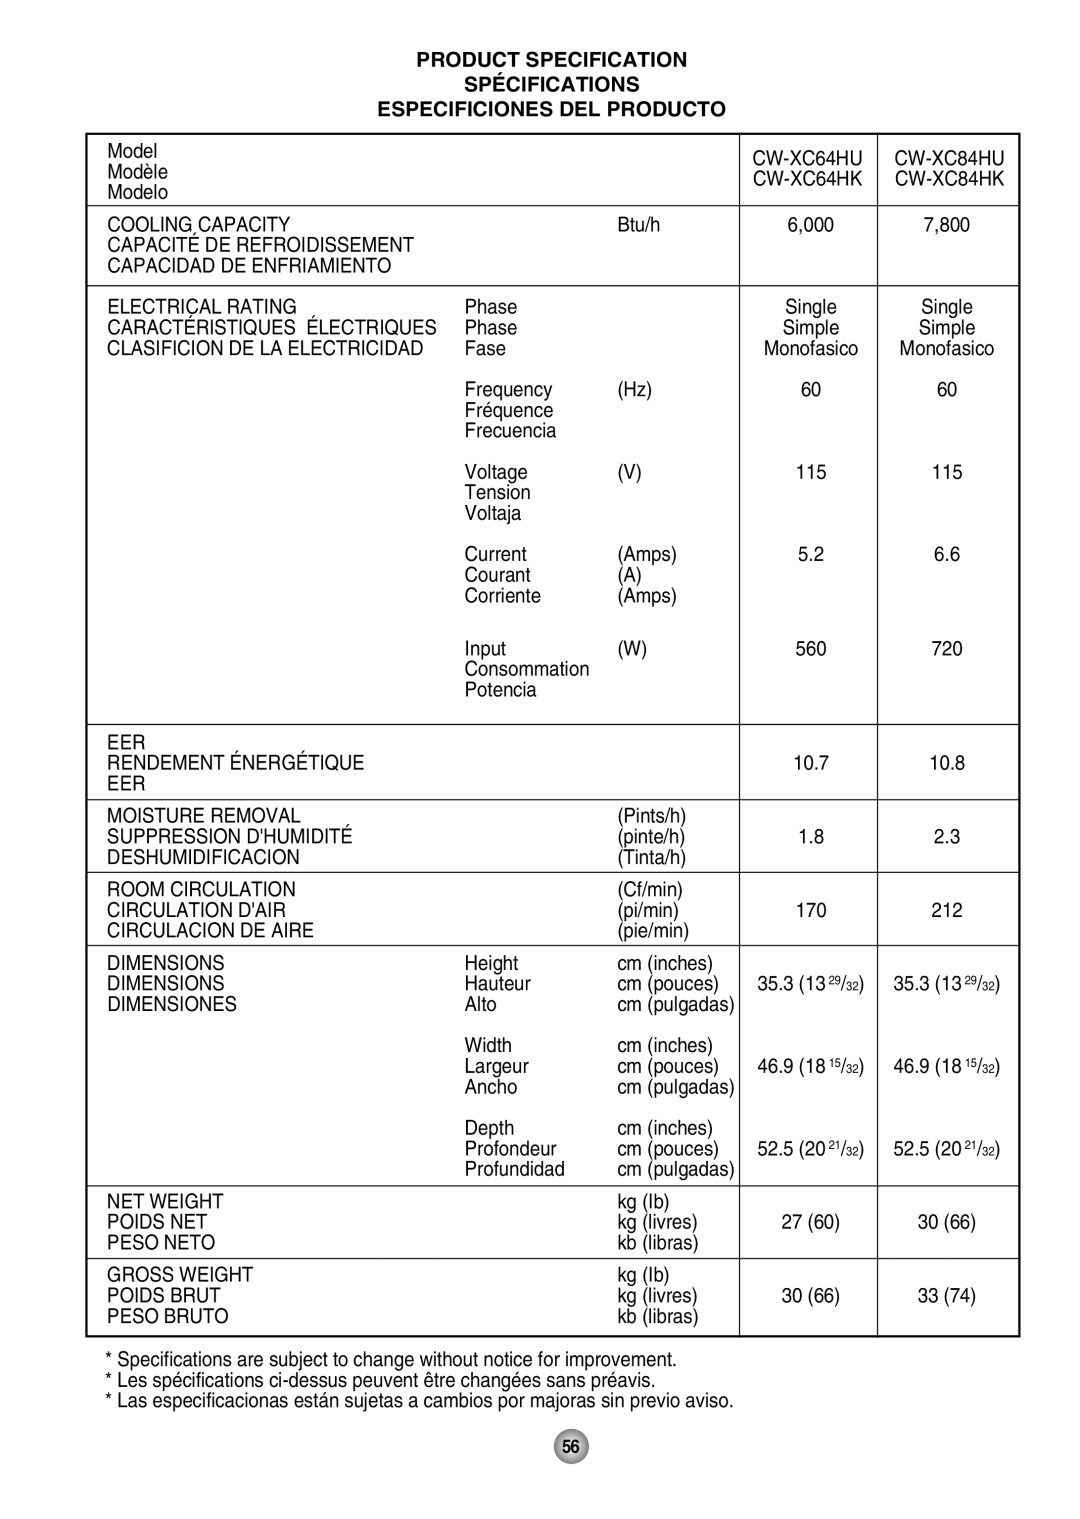 Panasonic CW-XC64HU manual Product Specification Spécifications, Especificiones Del Producto 